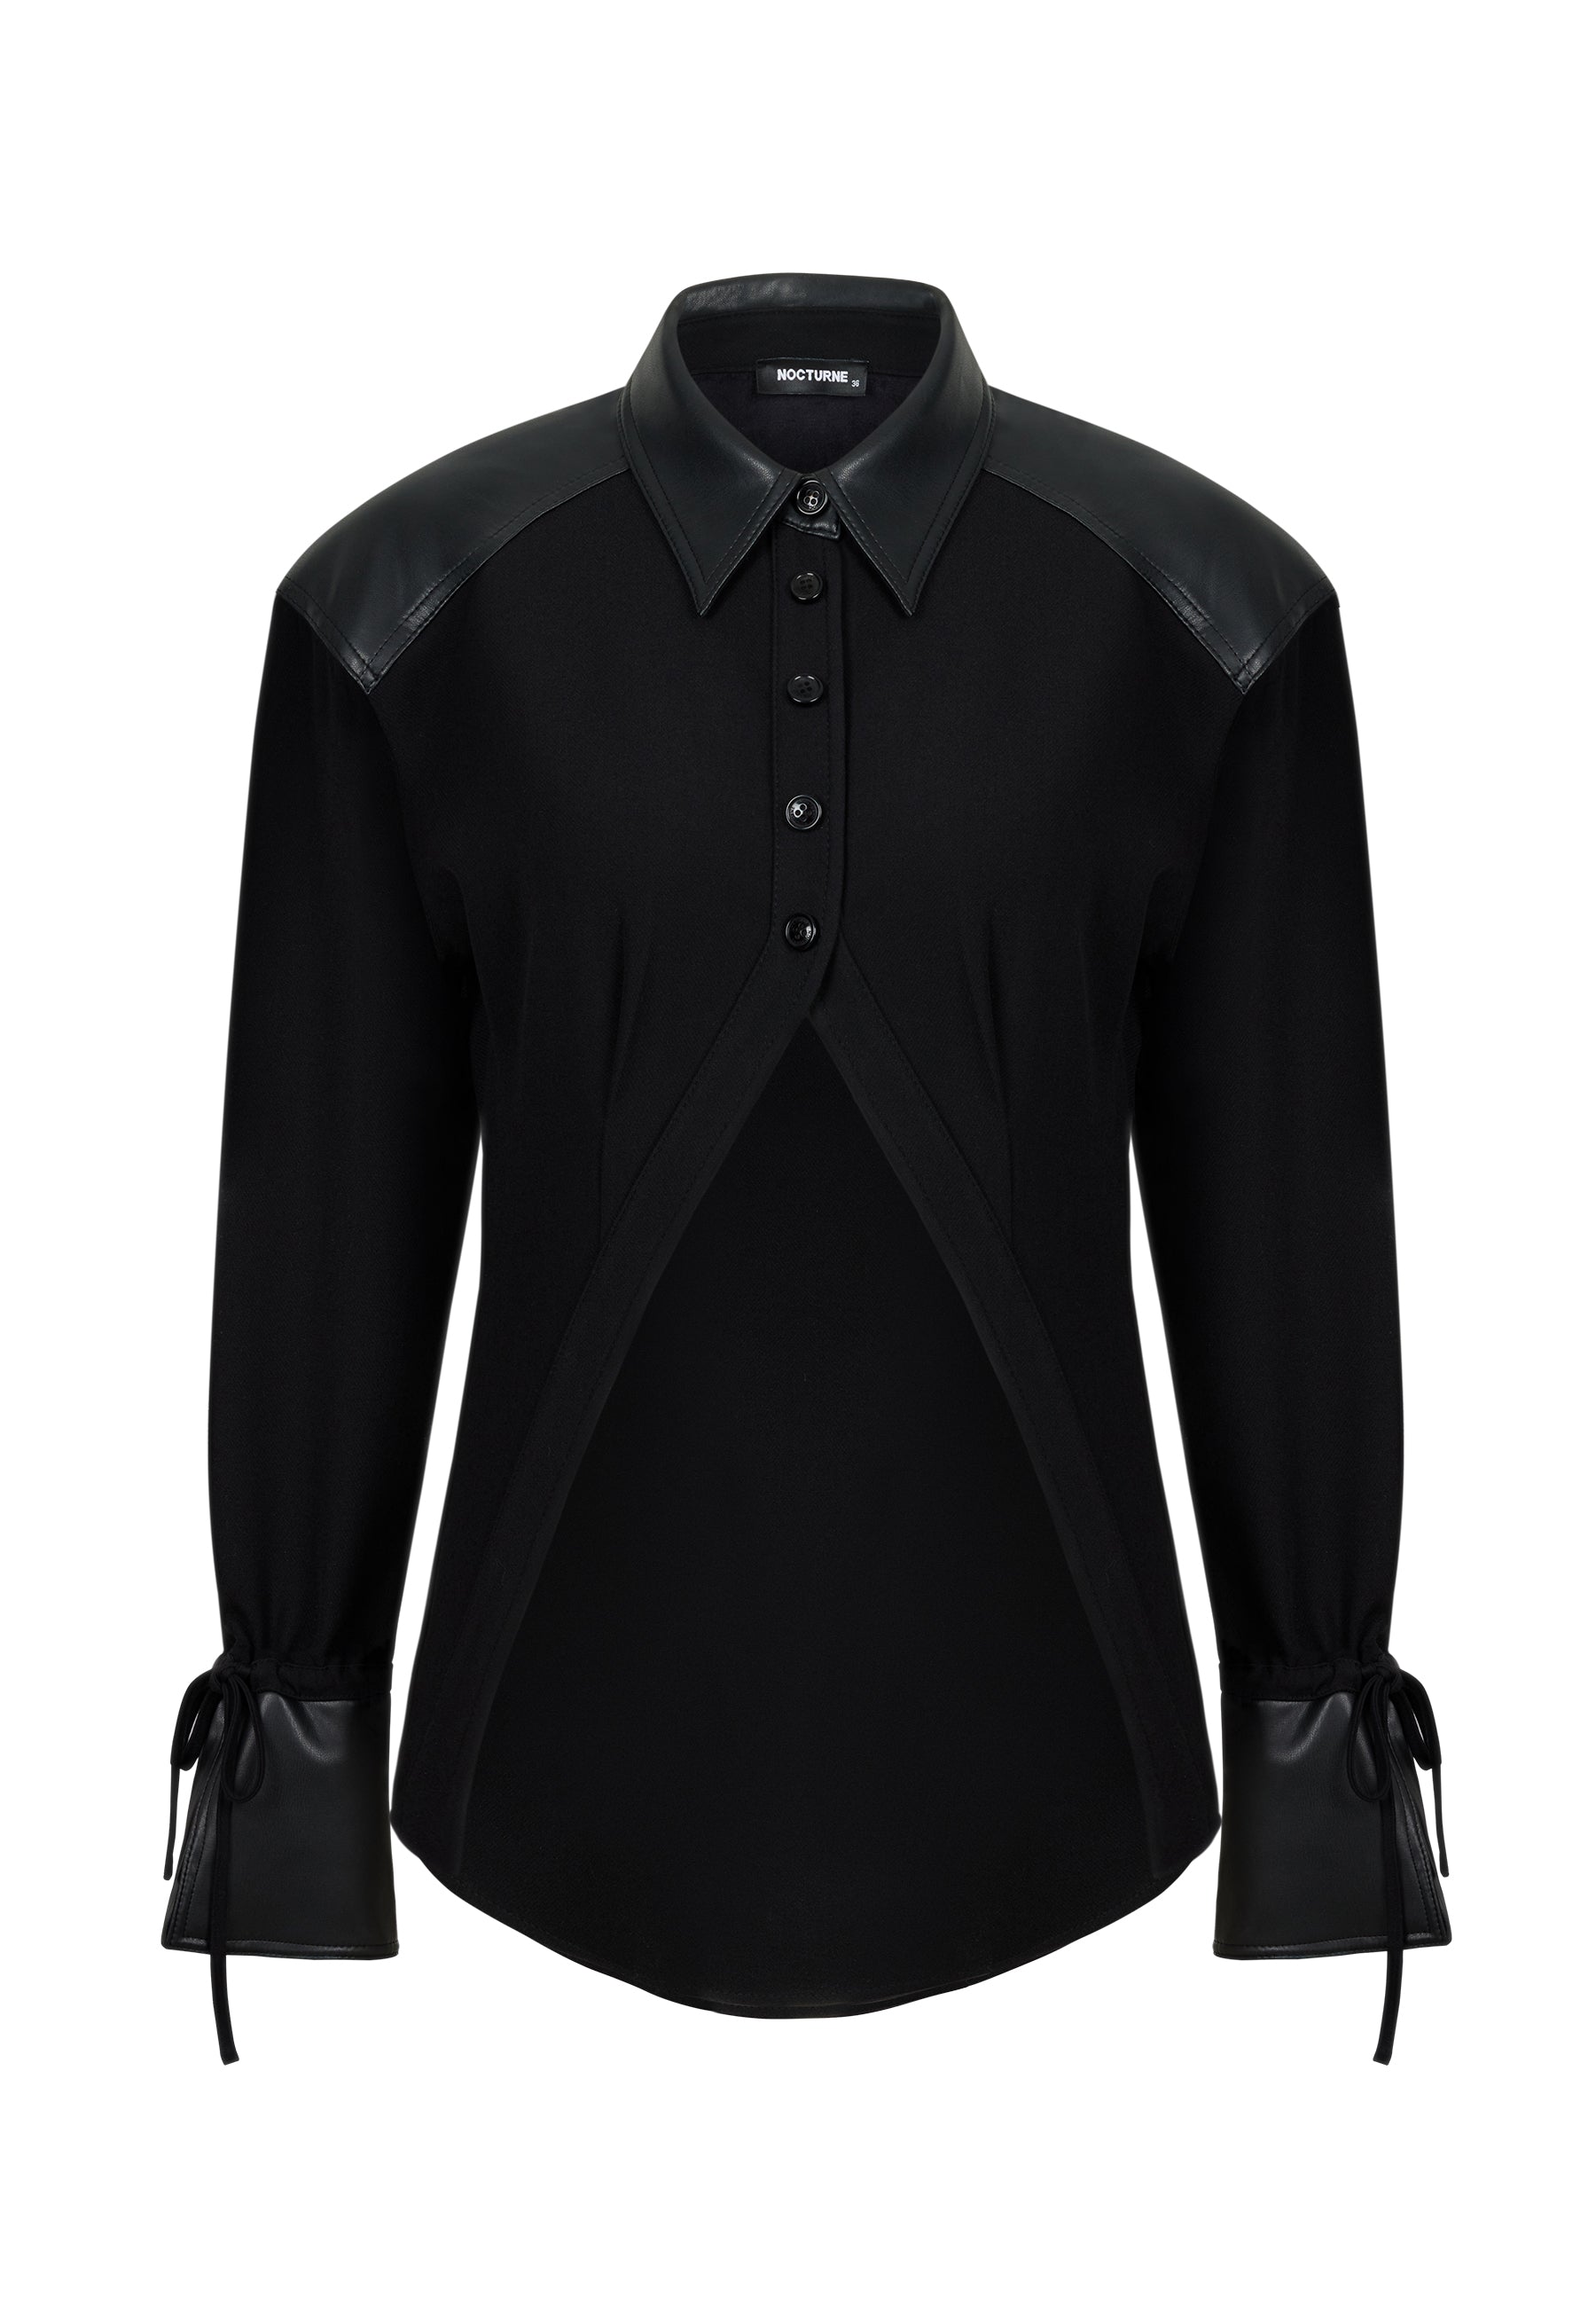 Nocturne Women's Black Leather Trim Shirt